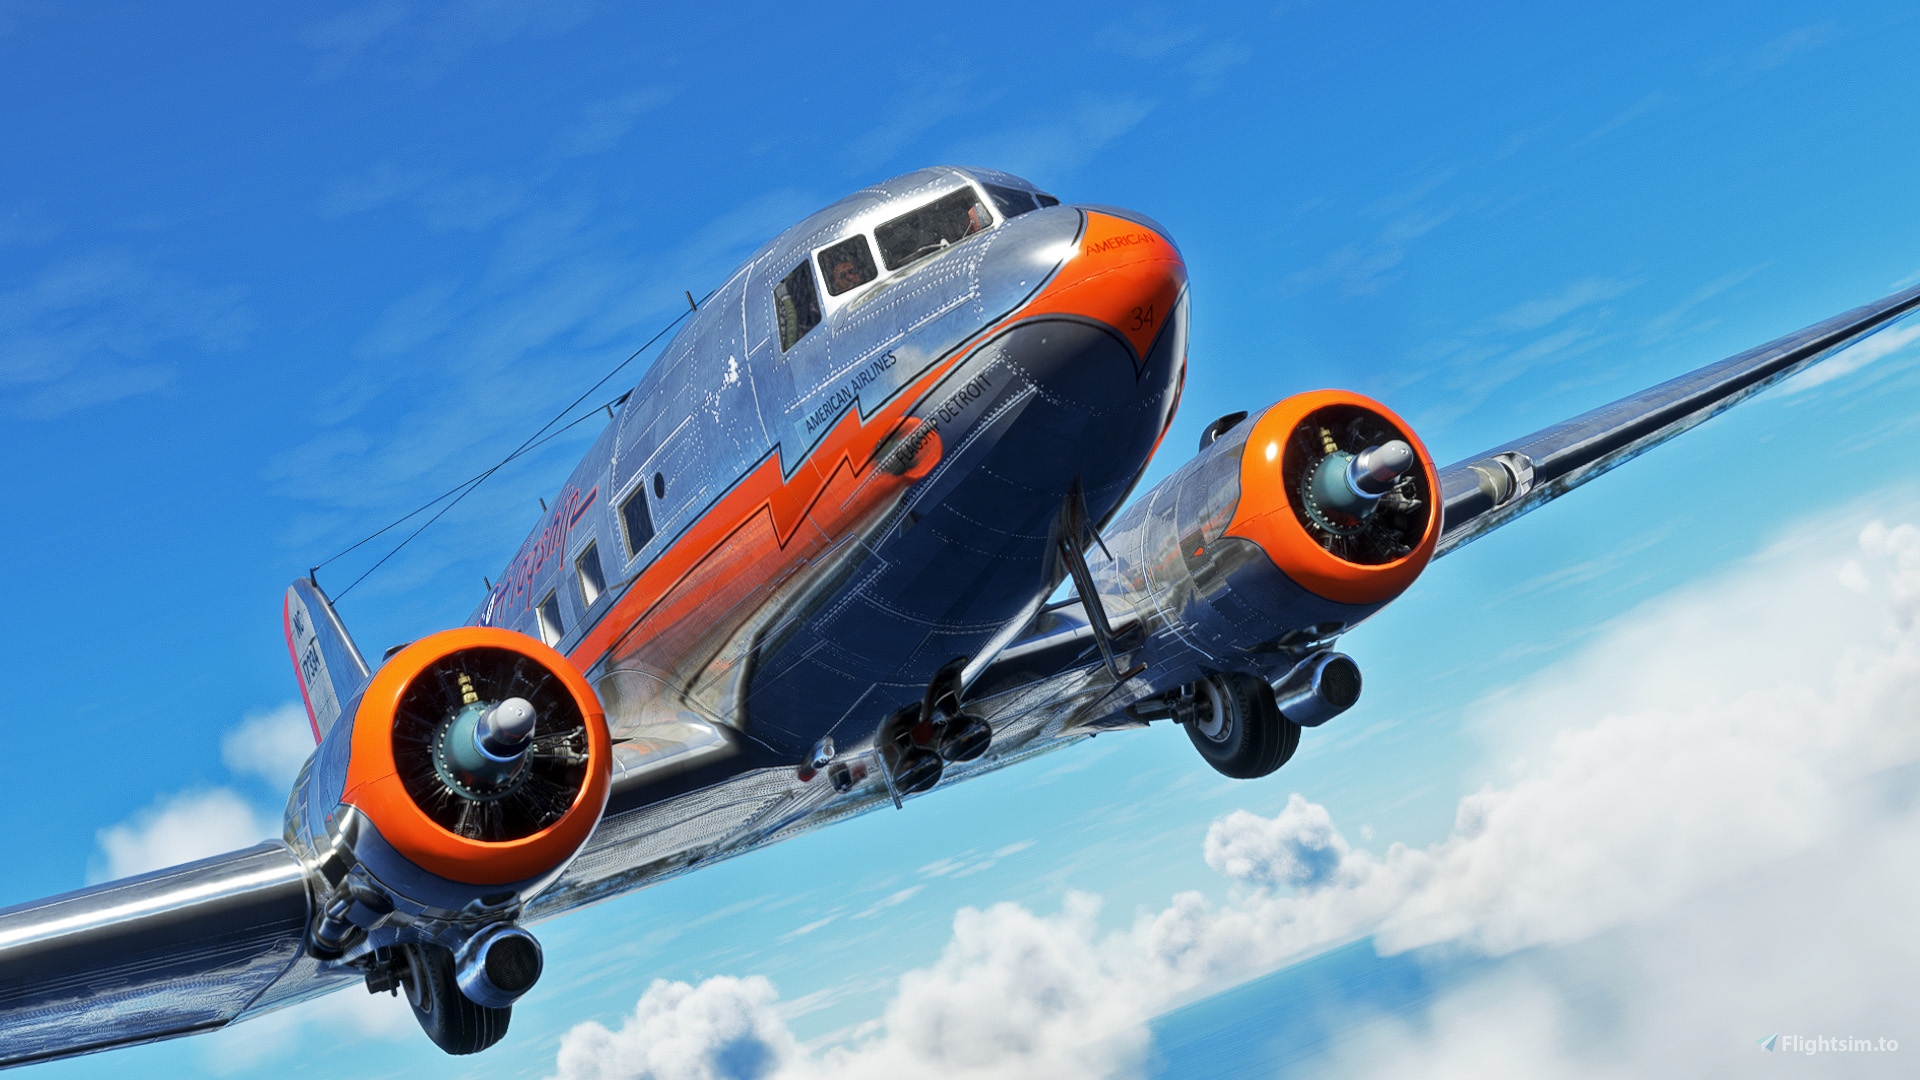 Douglas DC-3 wallpaper - Aircraft wallpapers - #33275